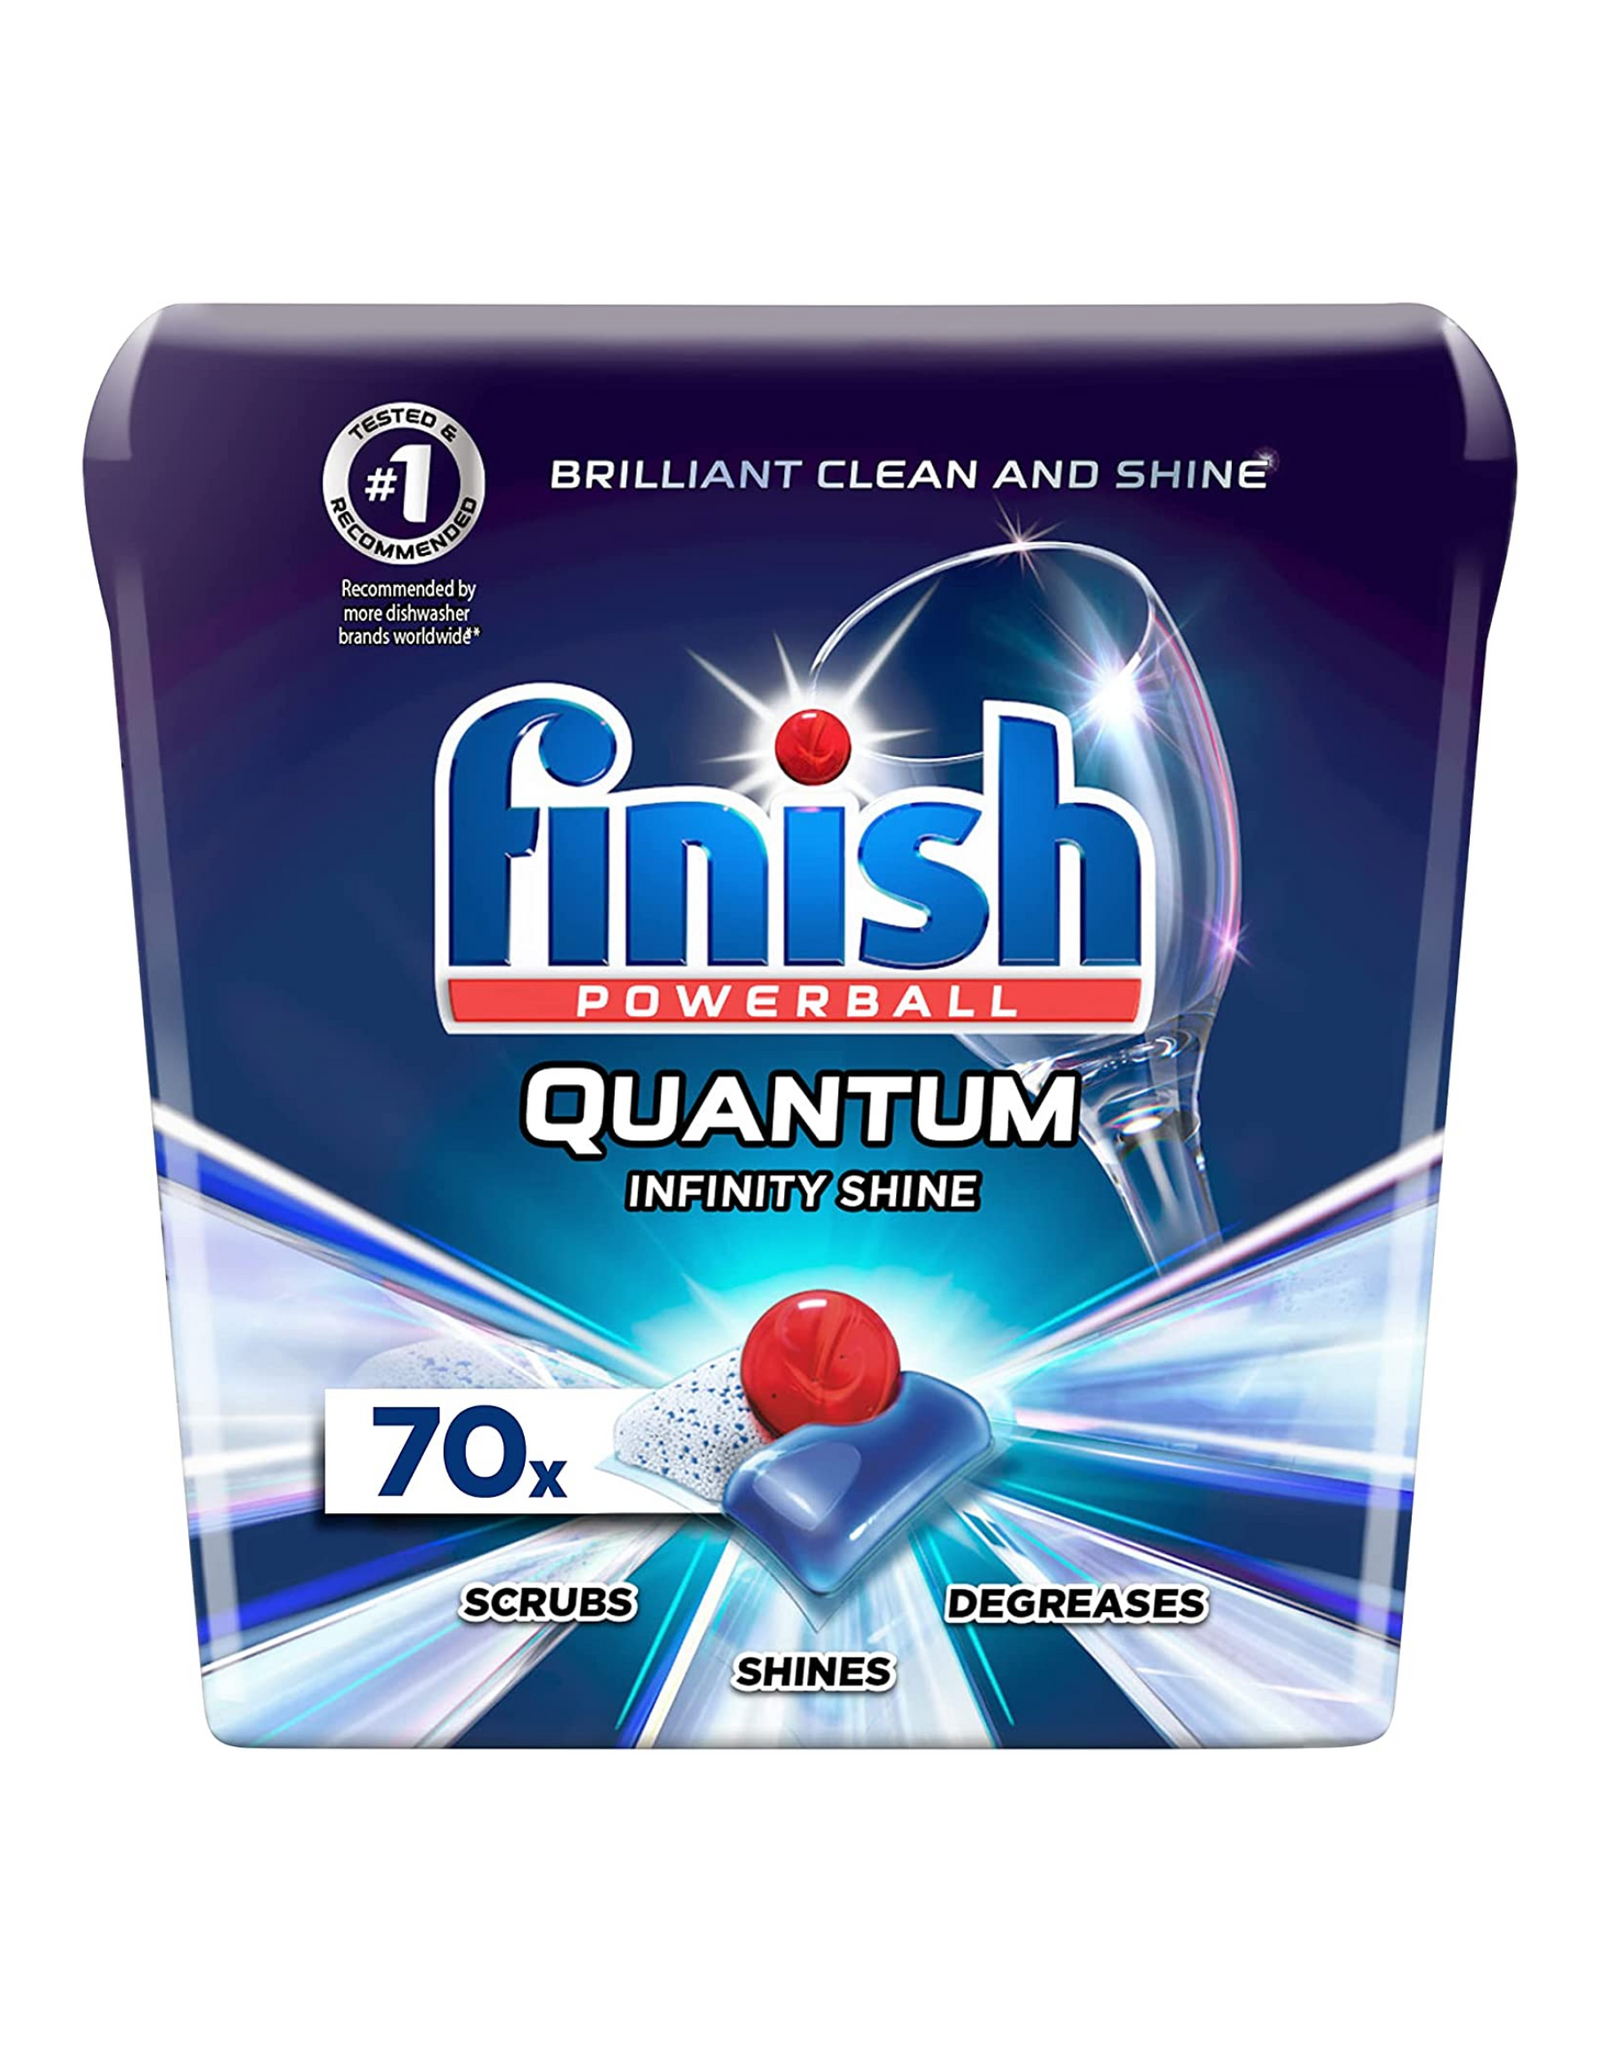 Finish Quantum Infinity Shine, 70 Ct, Dishwasher Detergent, Powerball, Dishwashing Tablets (Packaging May Vary)